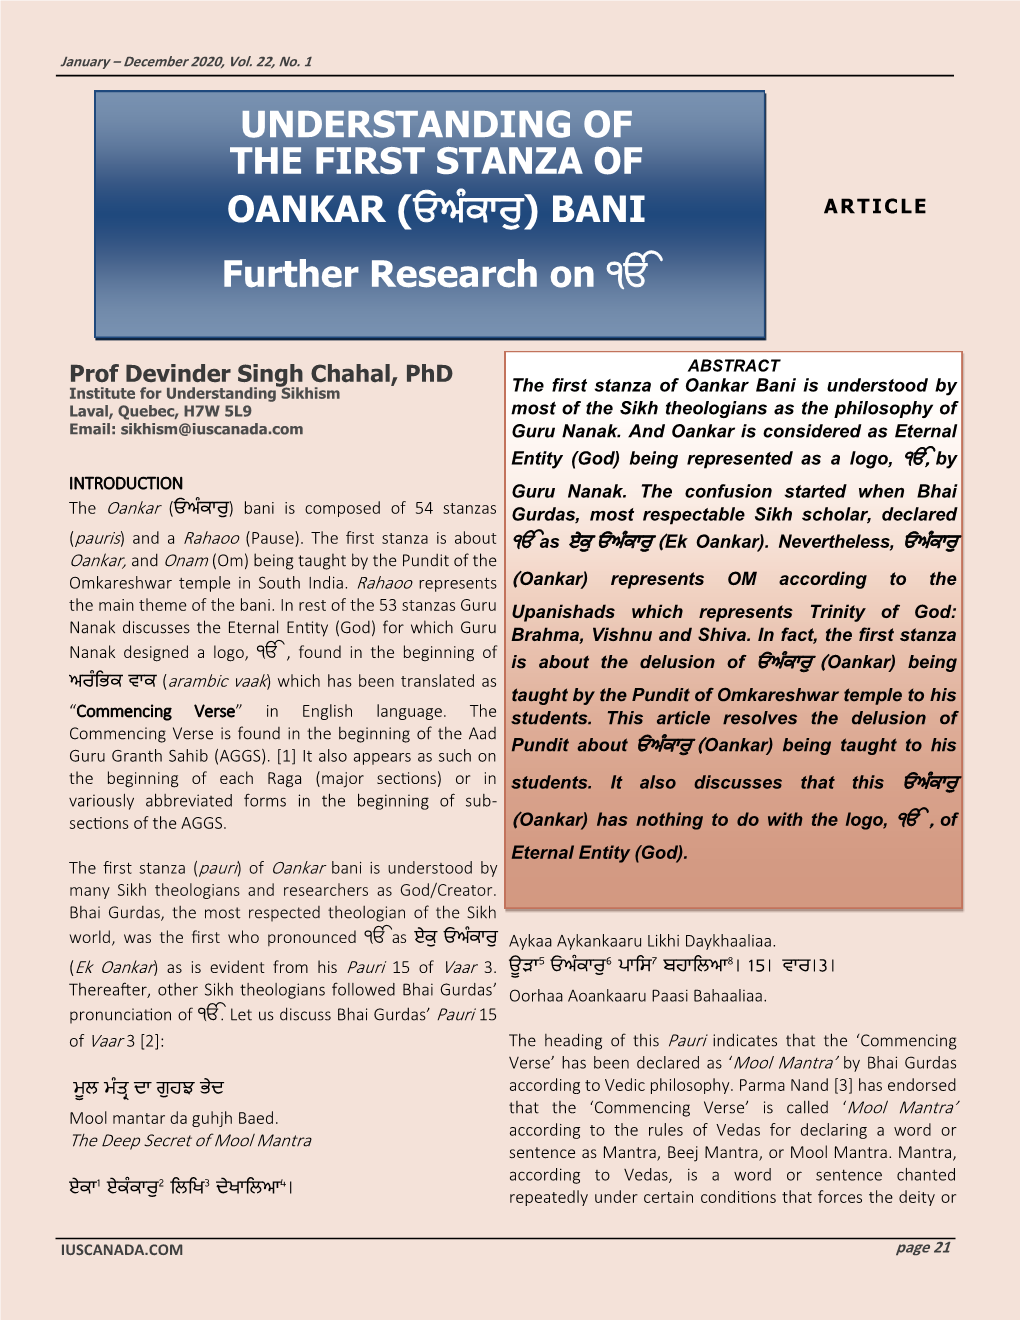 Understanding of the First Stanza of Oankar